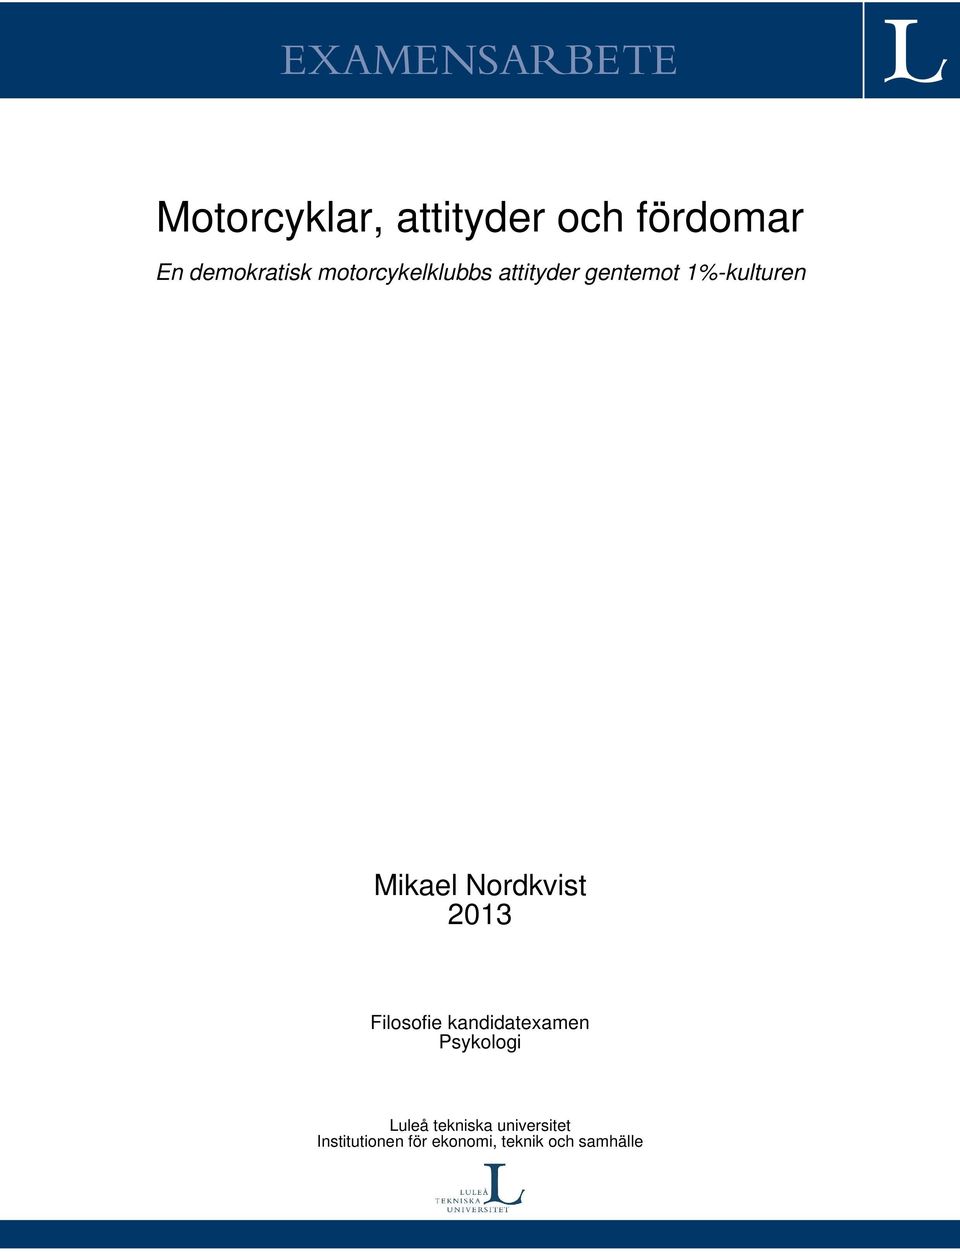 Mikael Nordkvist 2013 Filosofie kandidatexamen Psykologi